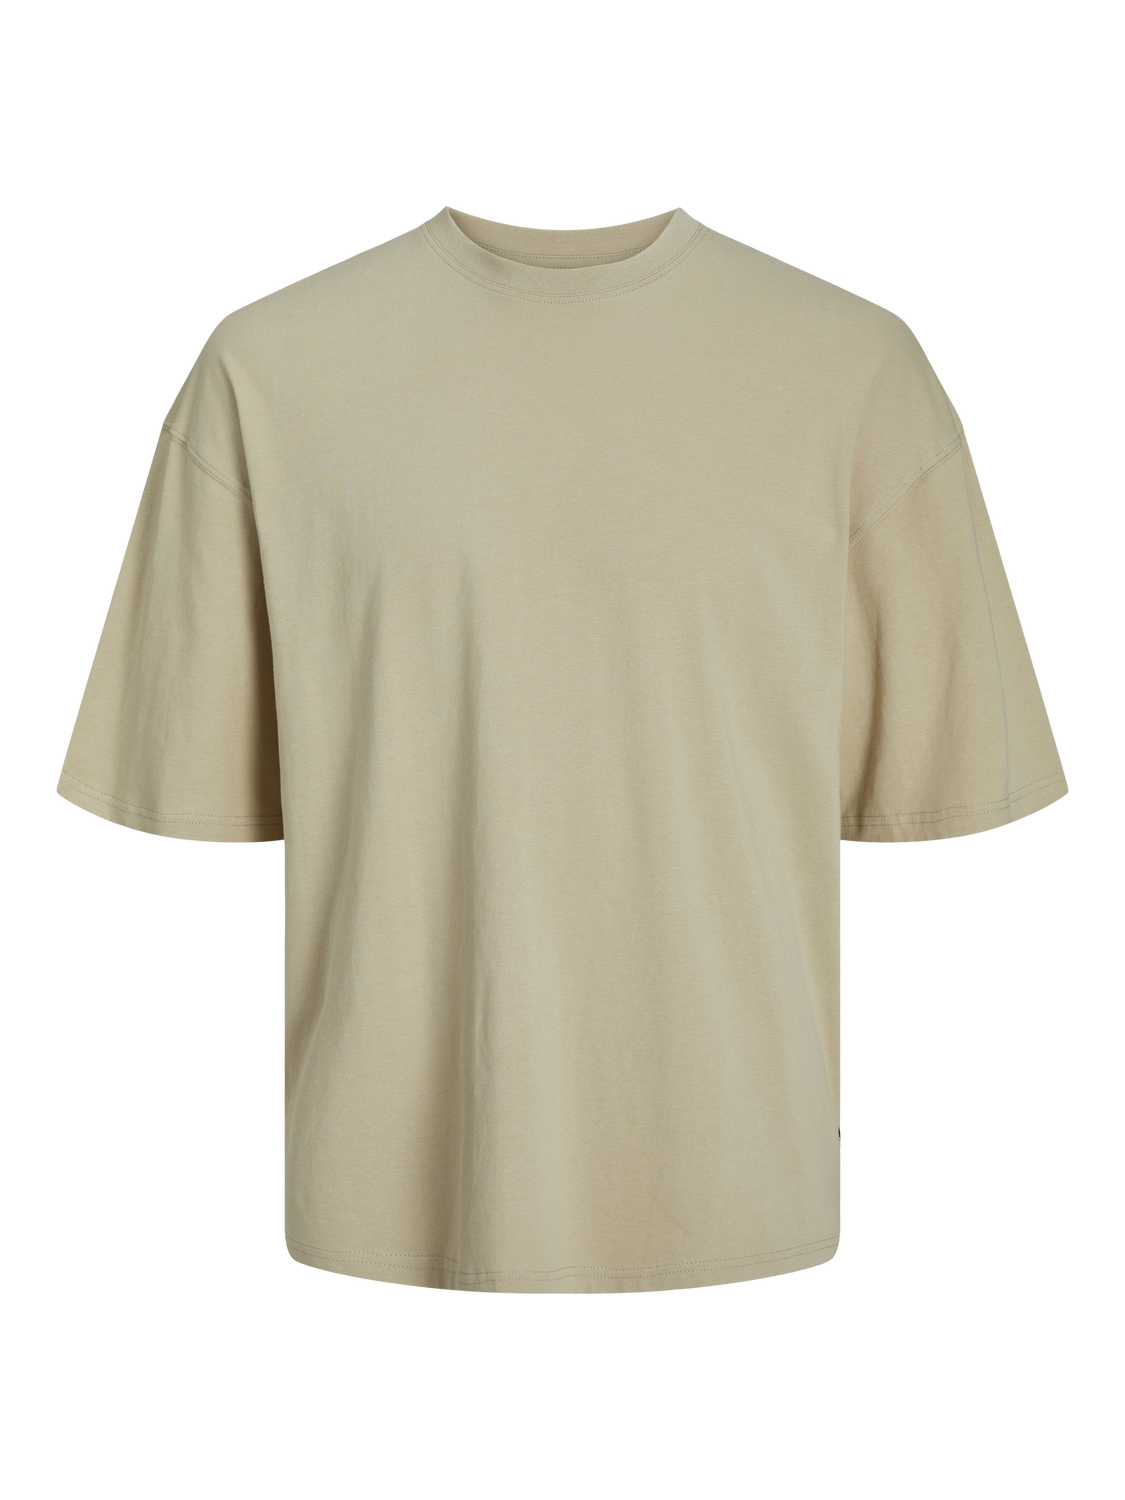 Camiseta básica beige - JORGRAND